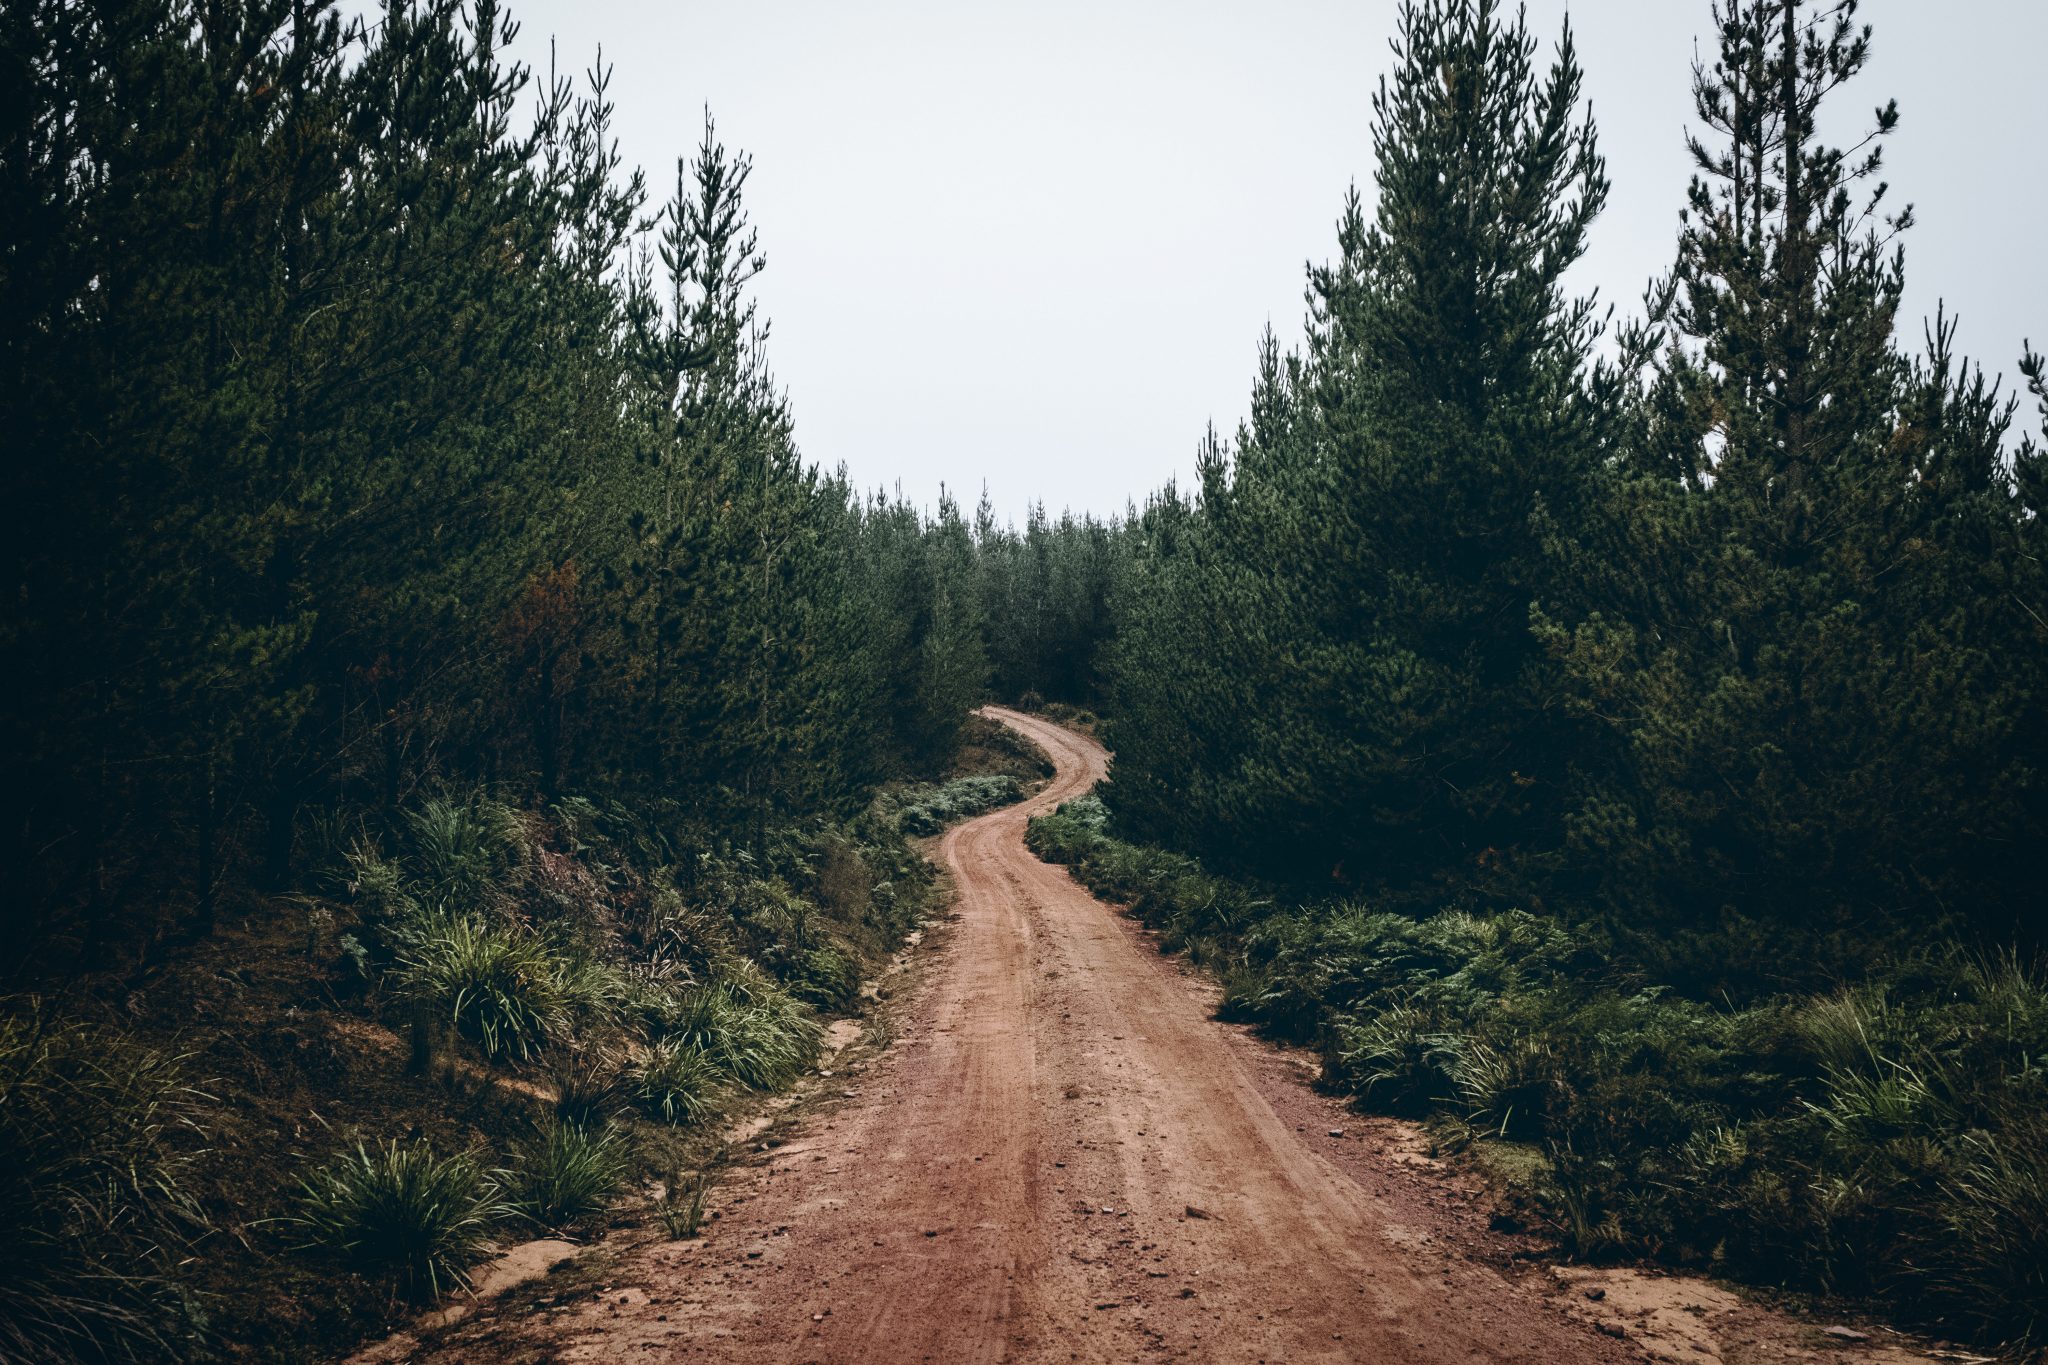 Dirt road through a forest